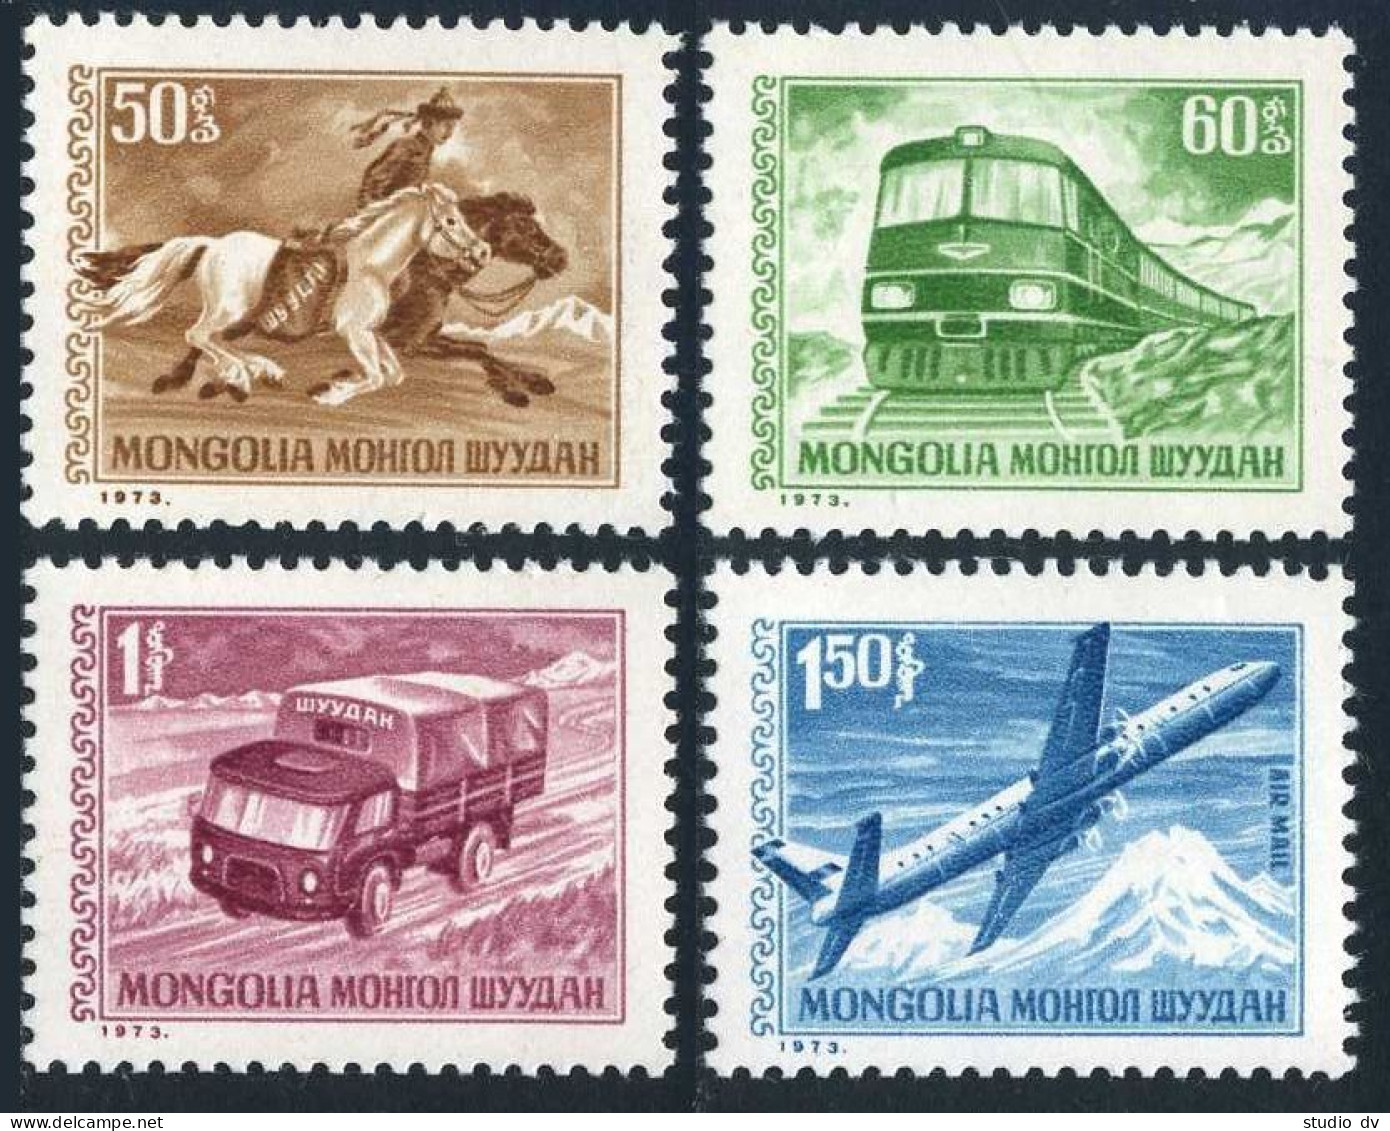 Mongolia 715-717,C34,MNH.Mi 764-767. Post Rider,Locomotive,Truck,Plane,1973. - Mongolia